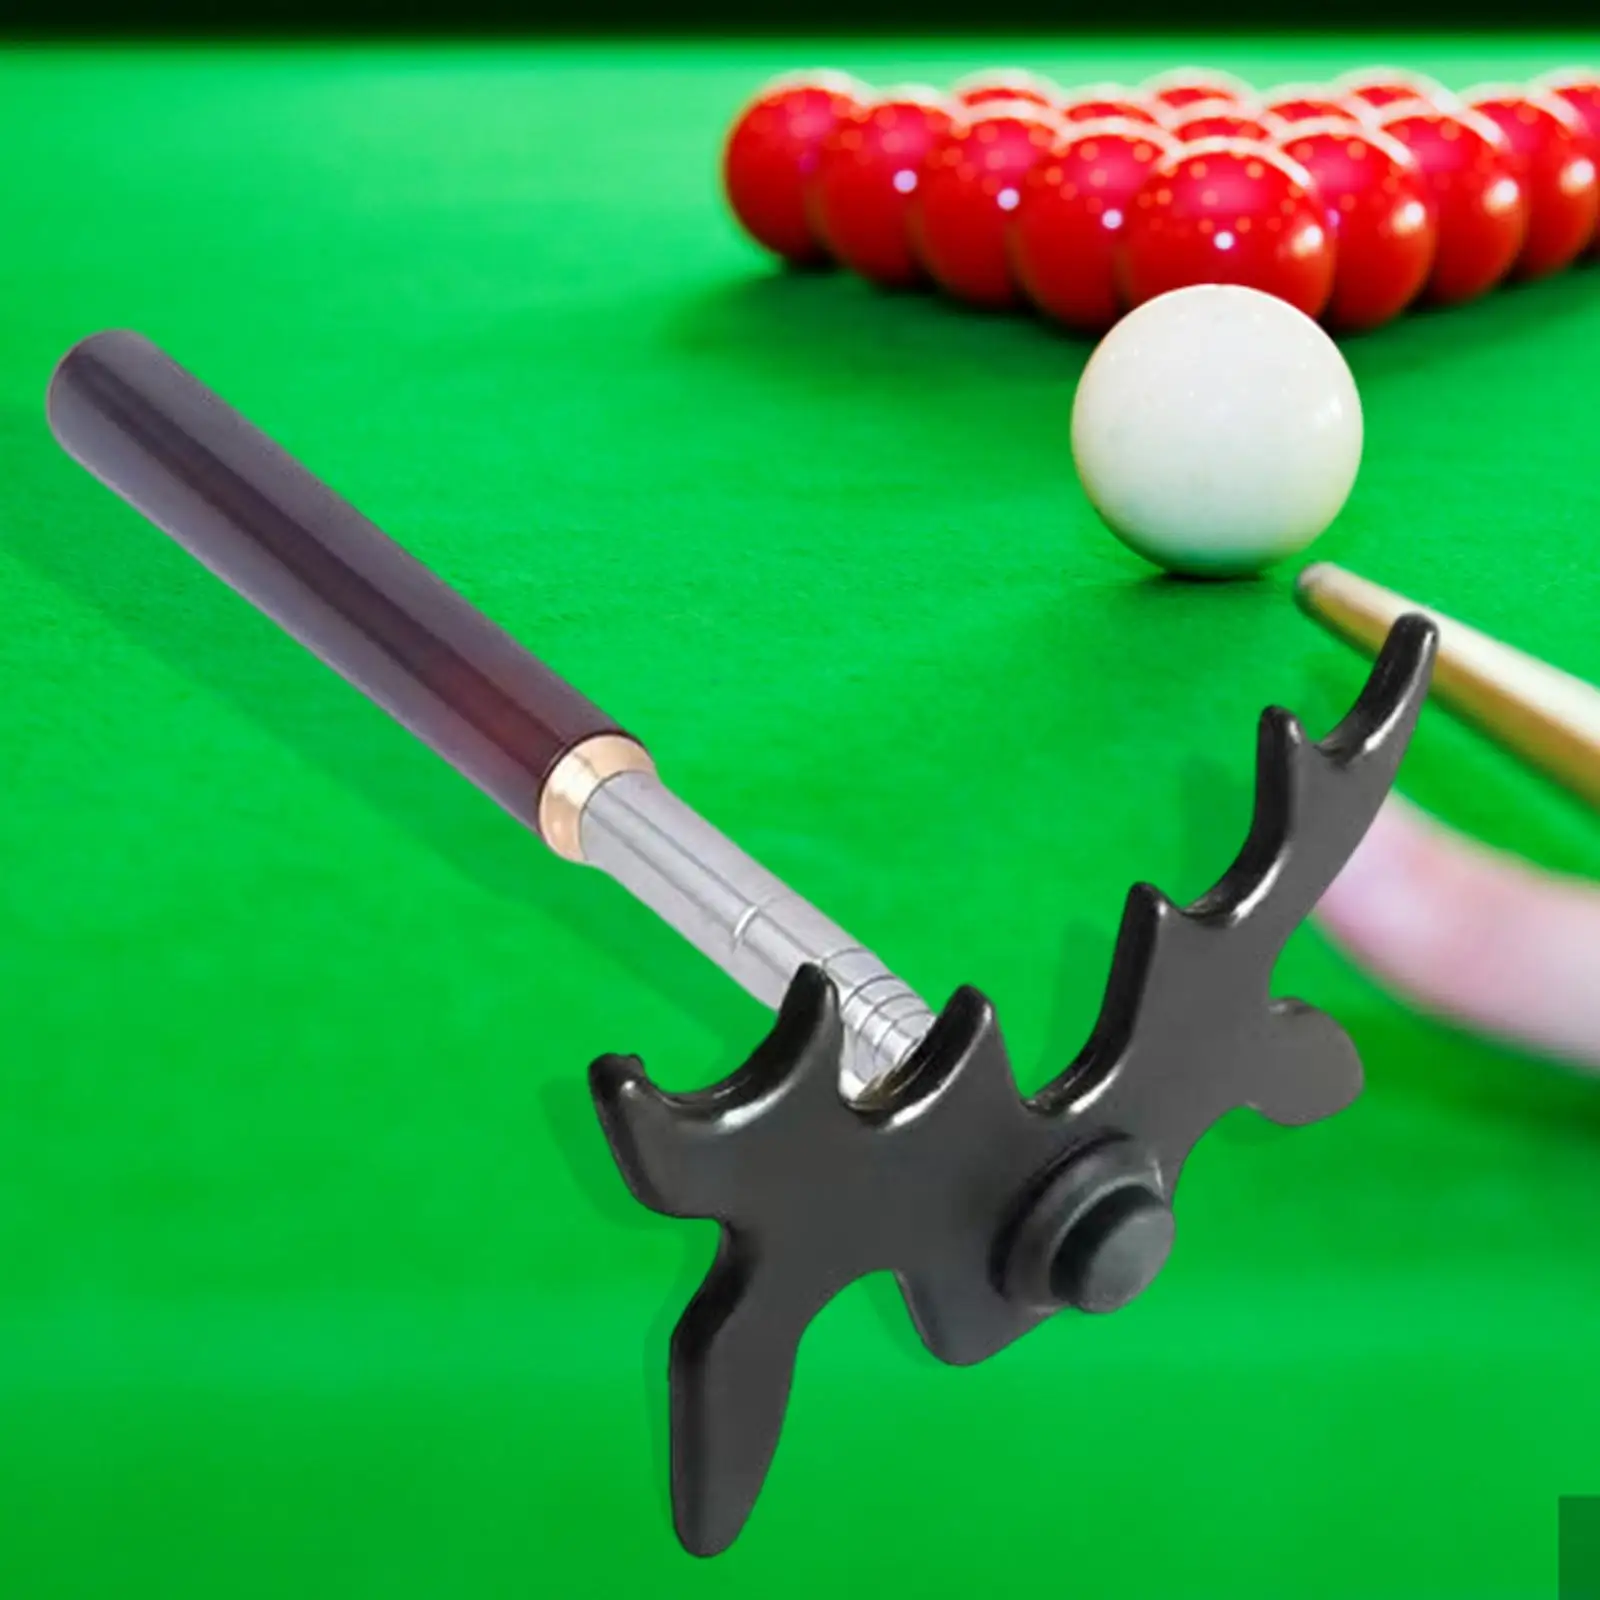 Simhoa Portable 2 Pcs Billiard Snooker Pool Cue Stick Bridge Head Holder Rest 